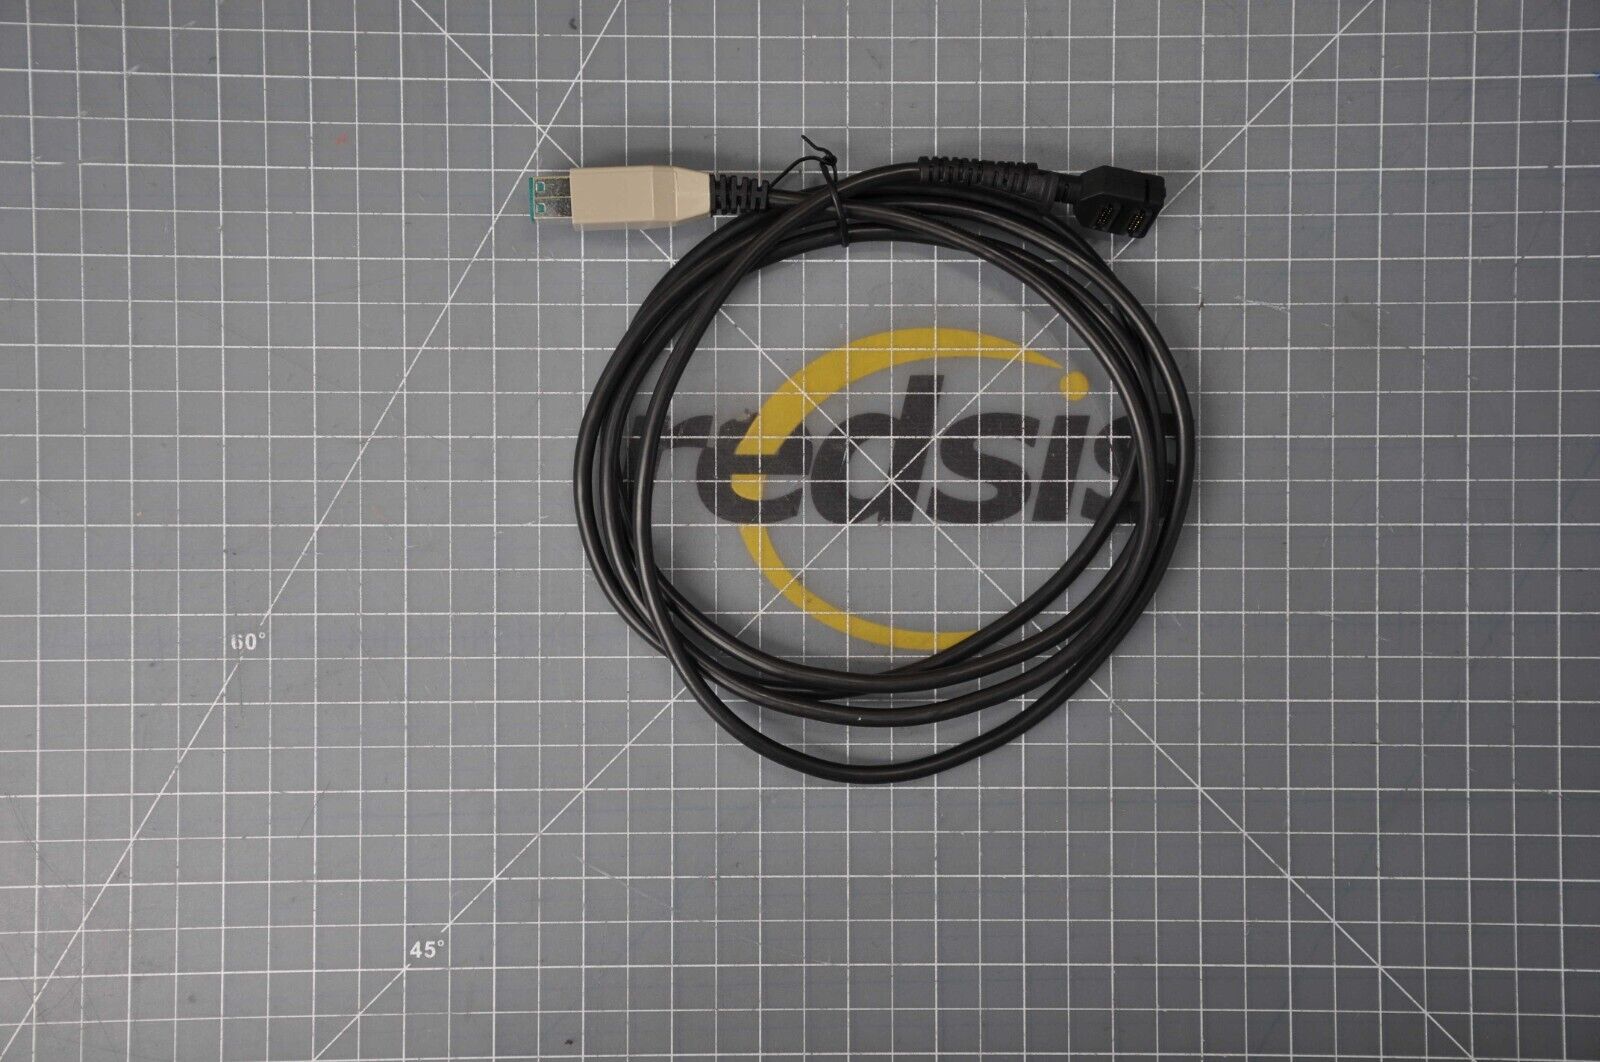 New VERIFONE Vx805/Vx820 Powered USB Cable to PC/ECR 2M CBL282-033-01-A